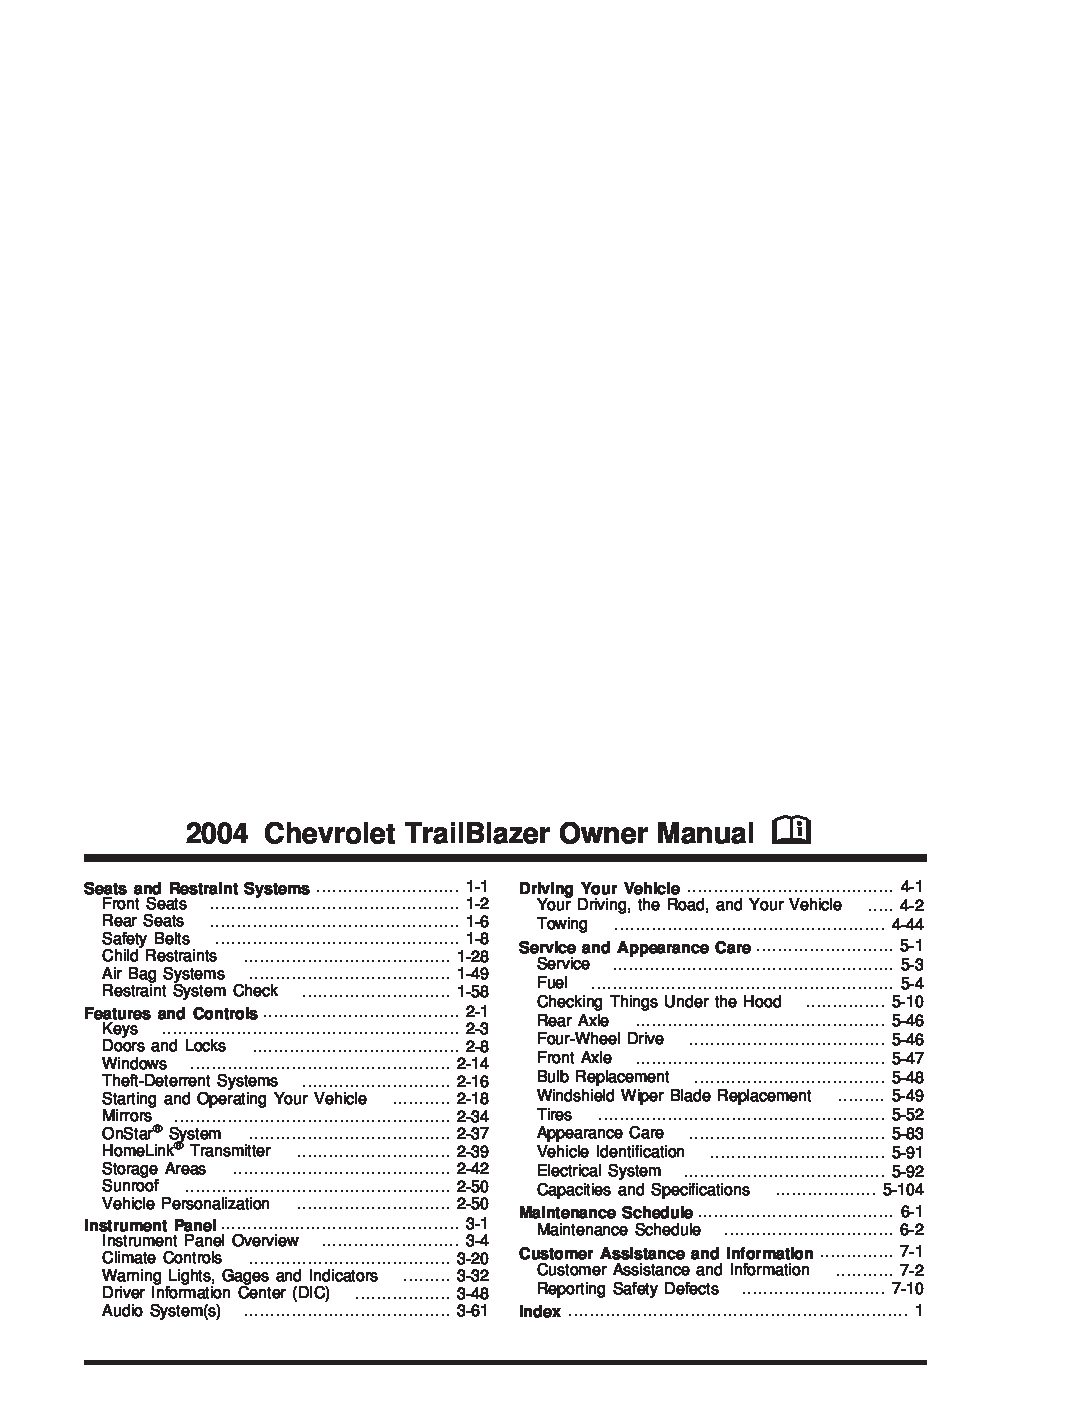 Chevrolet Trailblazer Service Manual Download